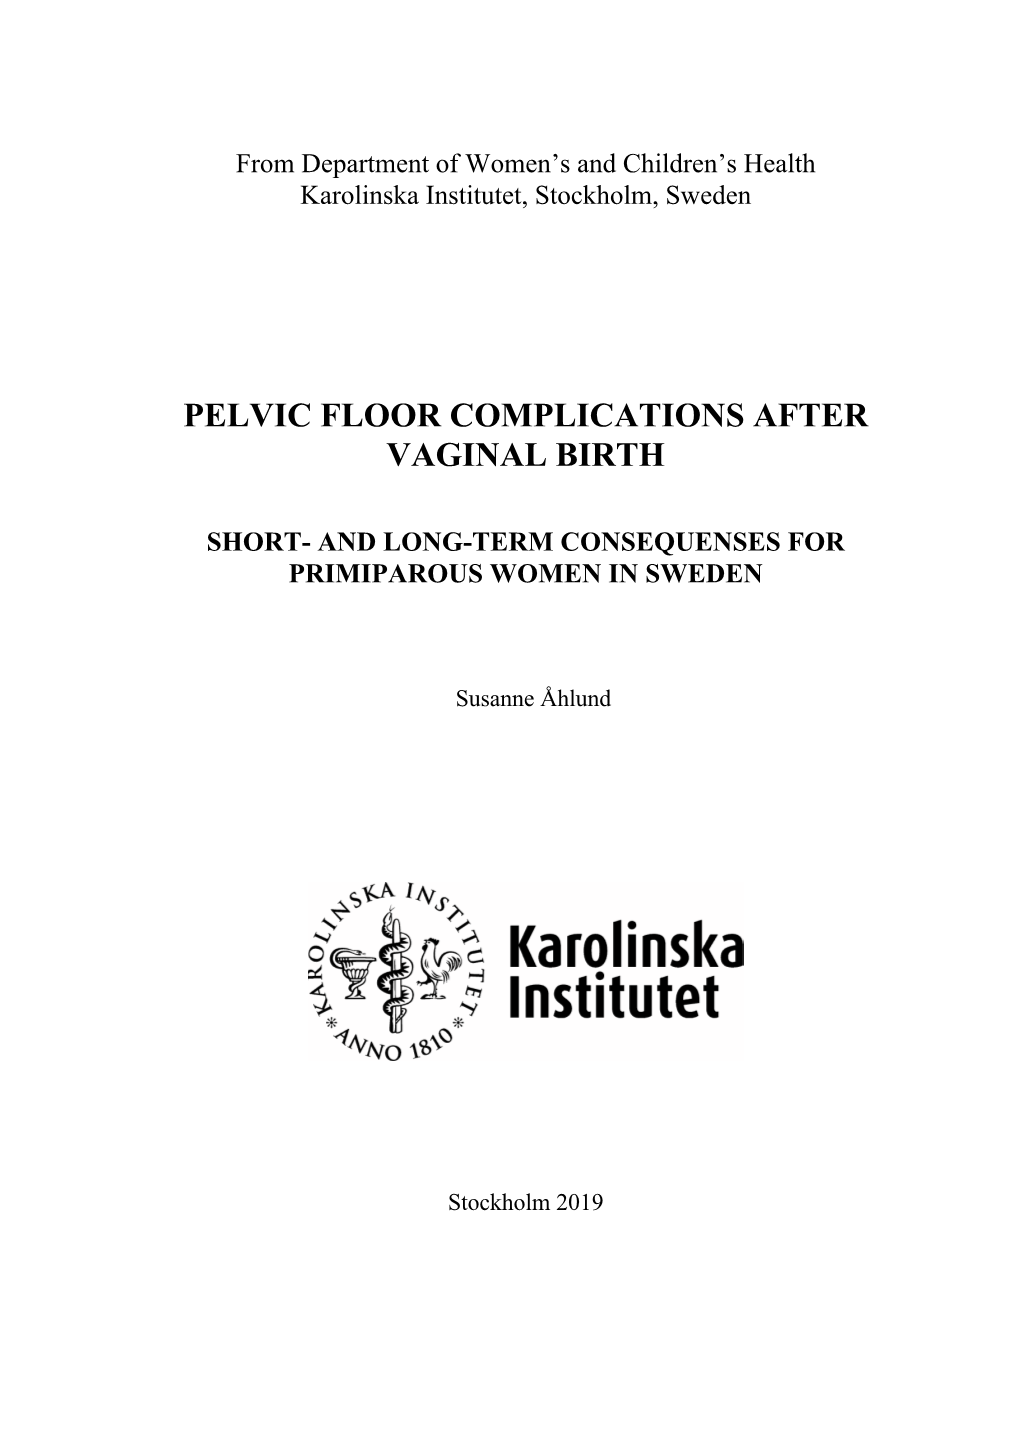 Pelvic Floor Complications After Vaginal Birth